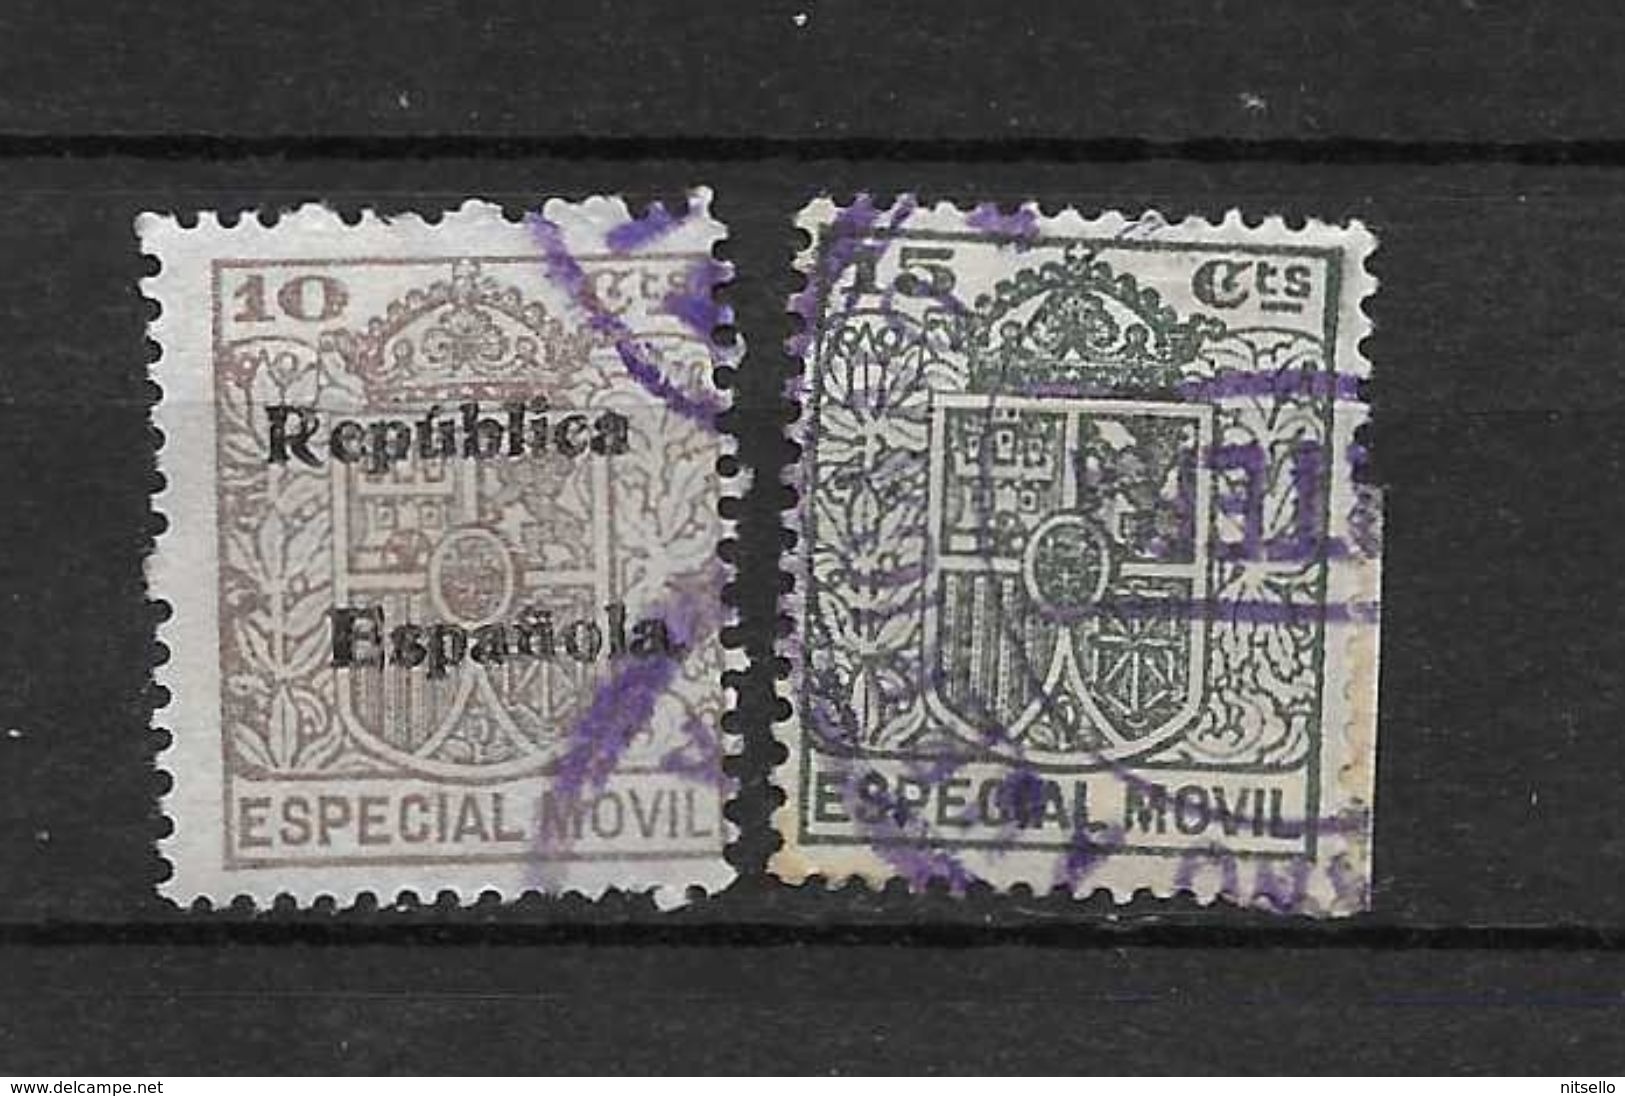 LOTE 1891 D  ///  ESPAÑA  SELLOS FISCALES  -  CON SOBRECARGA "REPUBLICA ESPAÑOLA" - Revenue Stamps